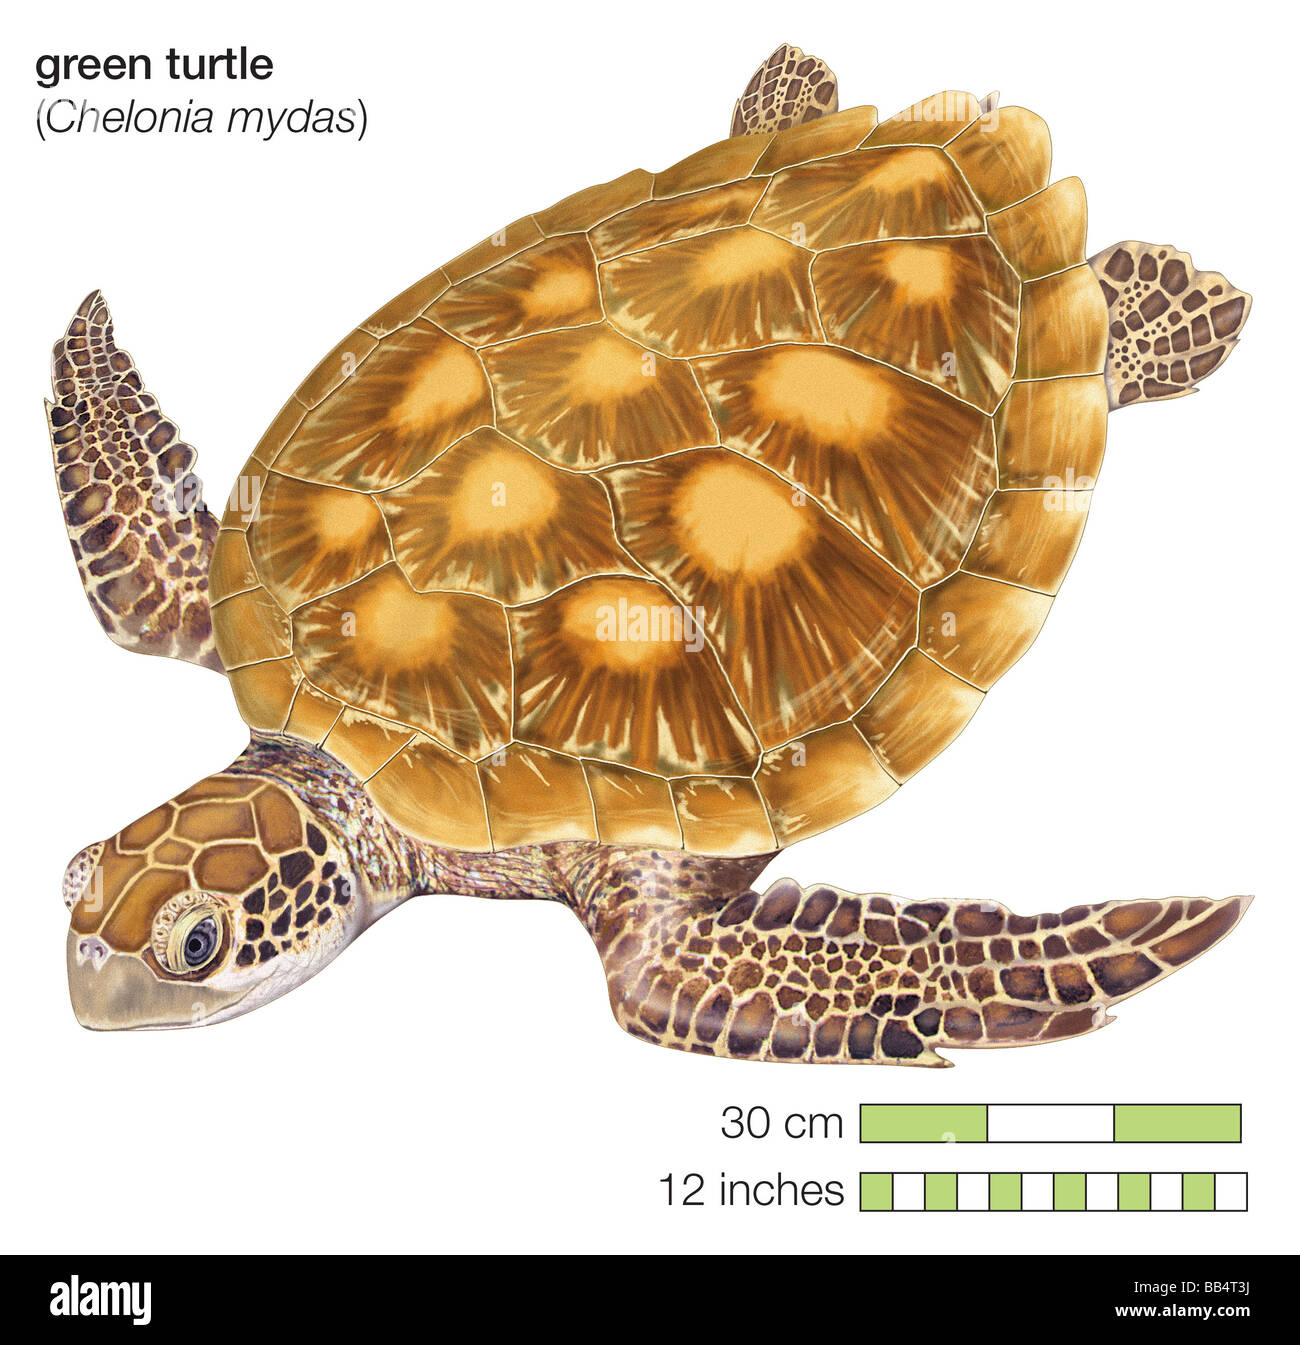 La tortuga verde (Chelonia mydas) Foto de stock